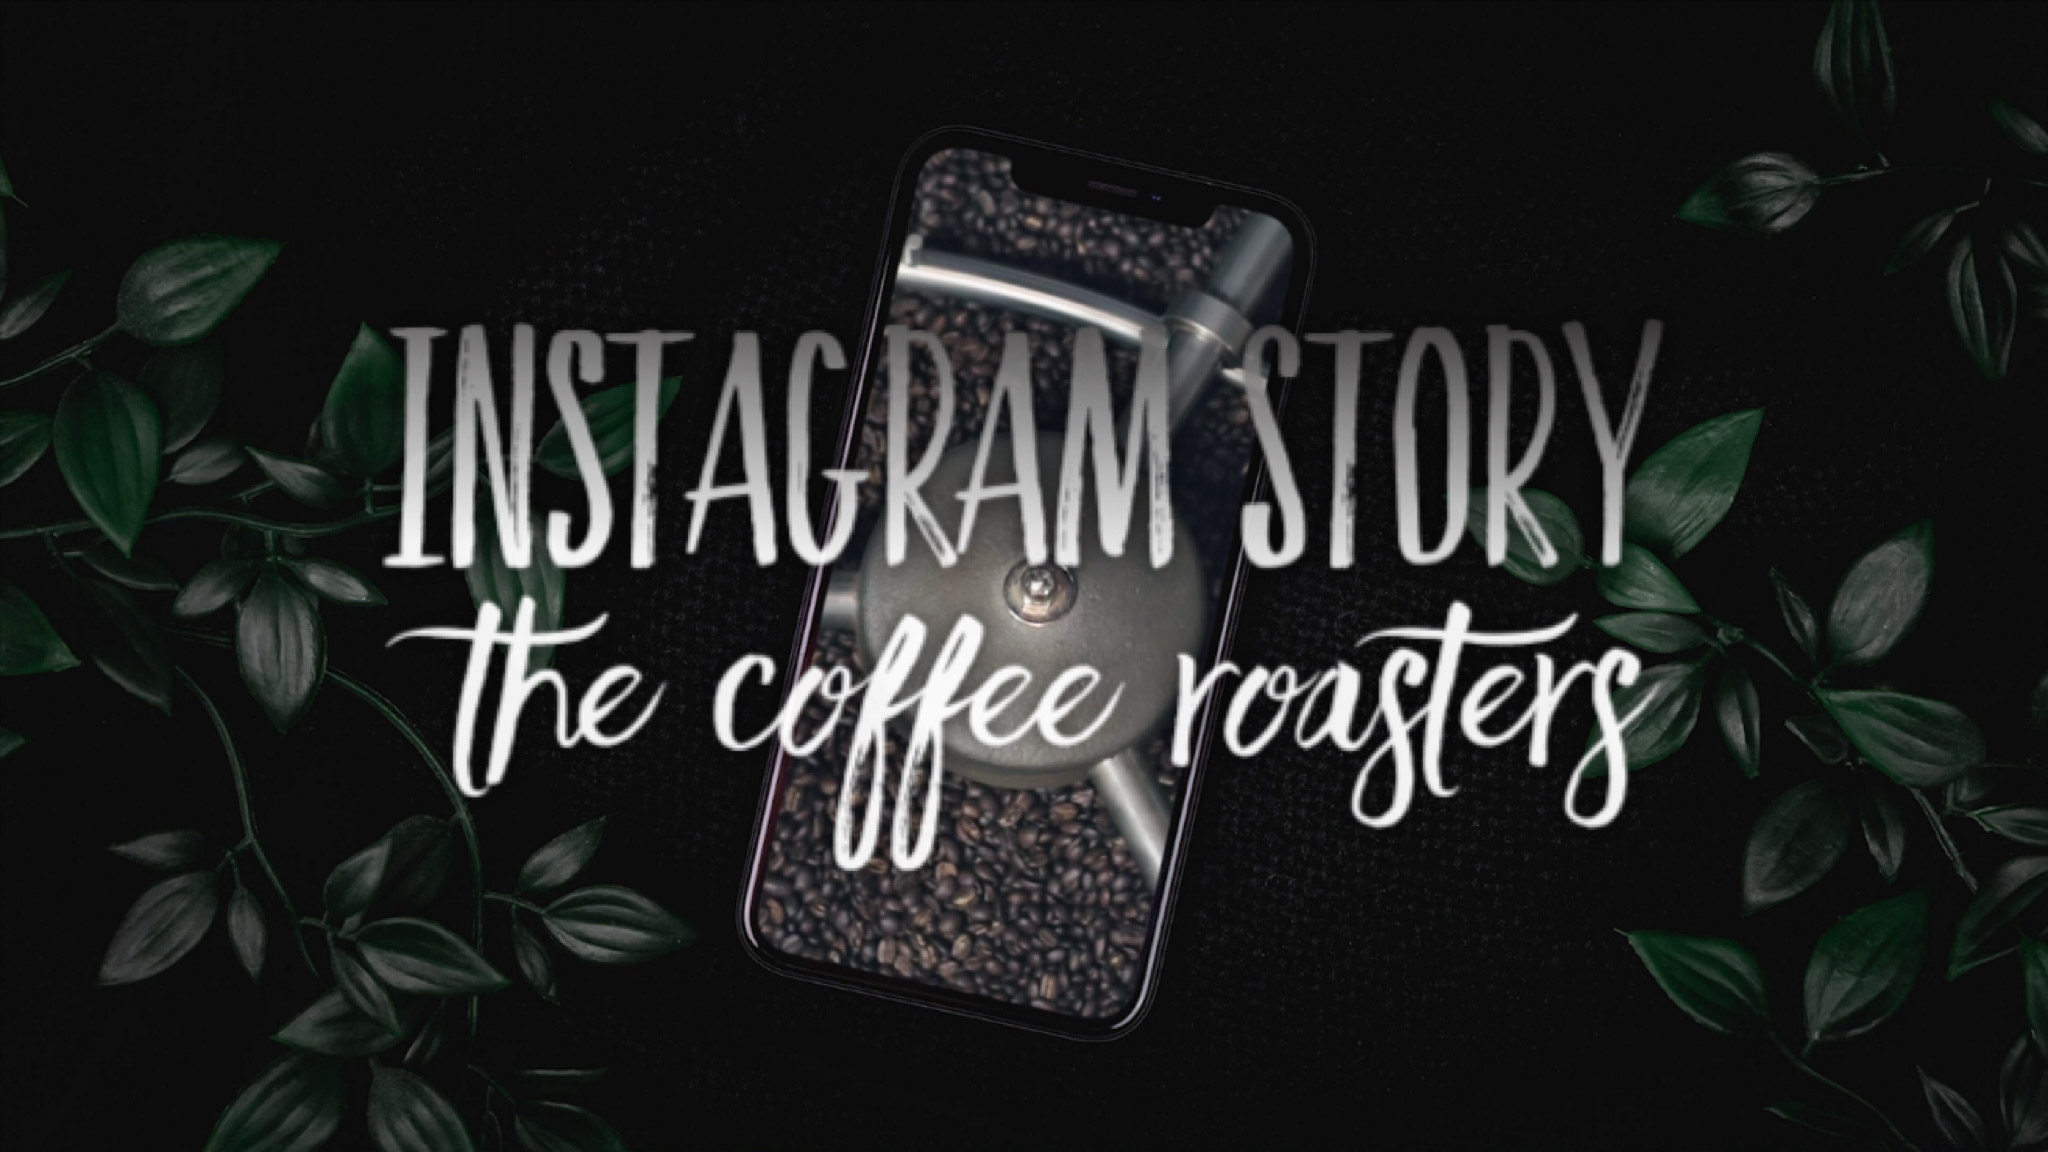 Titelbild Instagram Story the coffee roasters